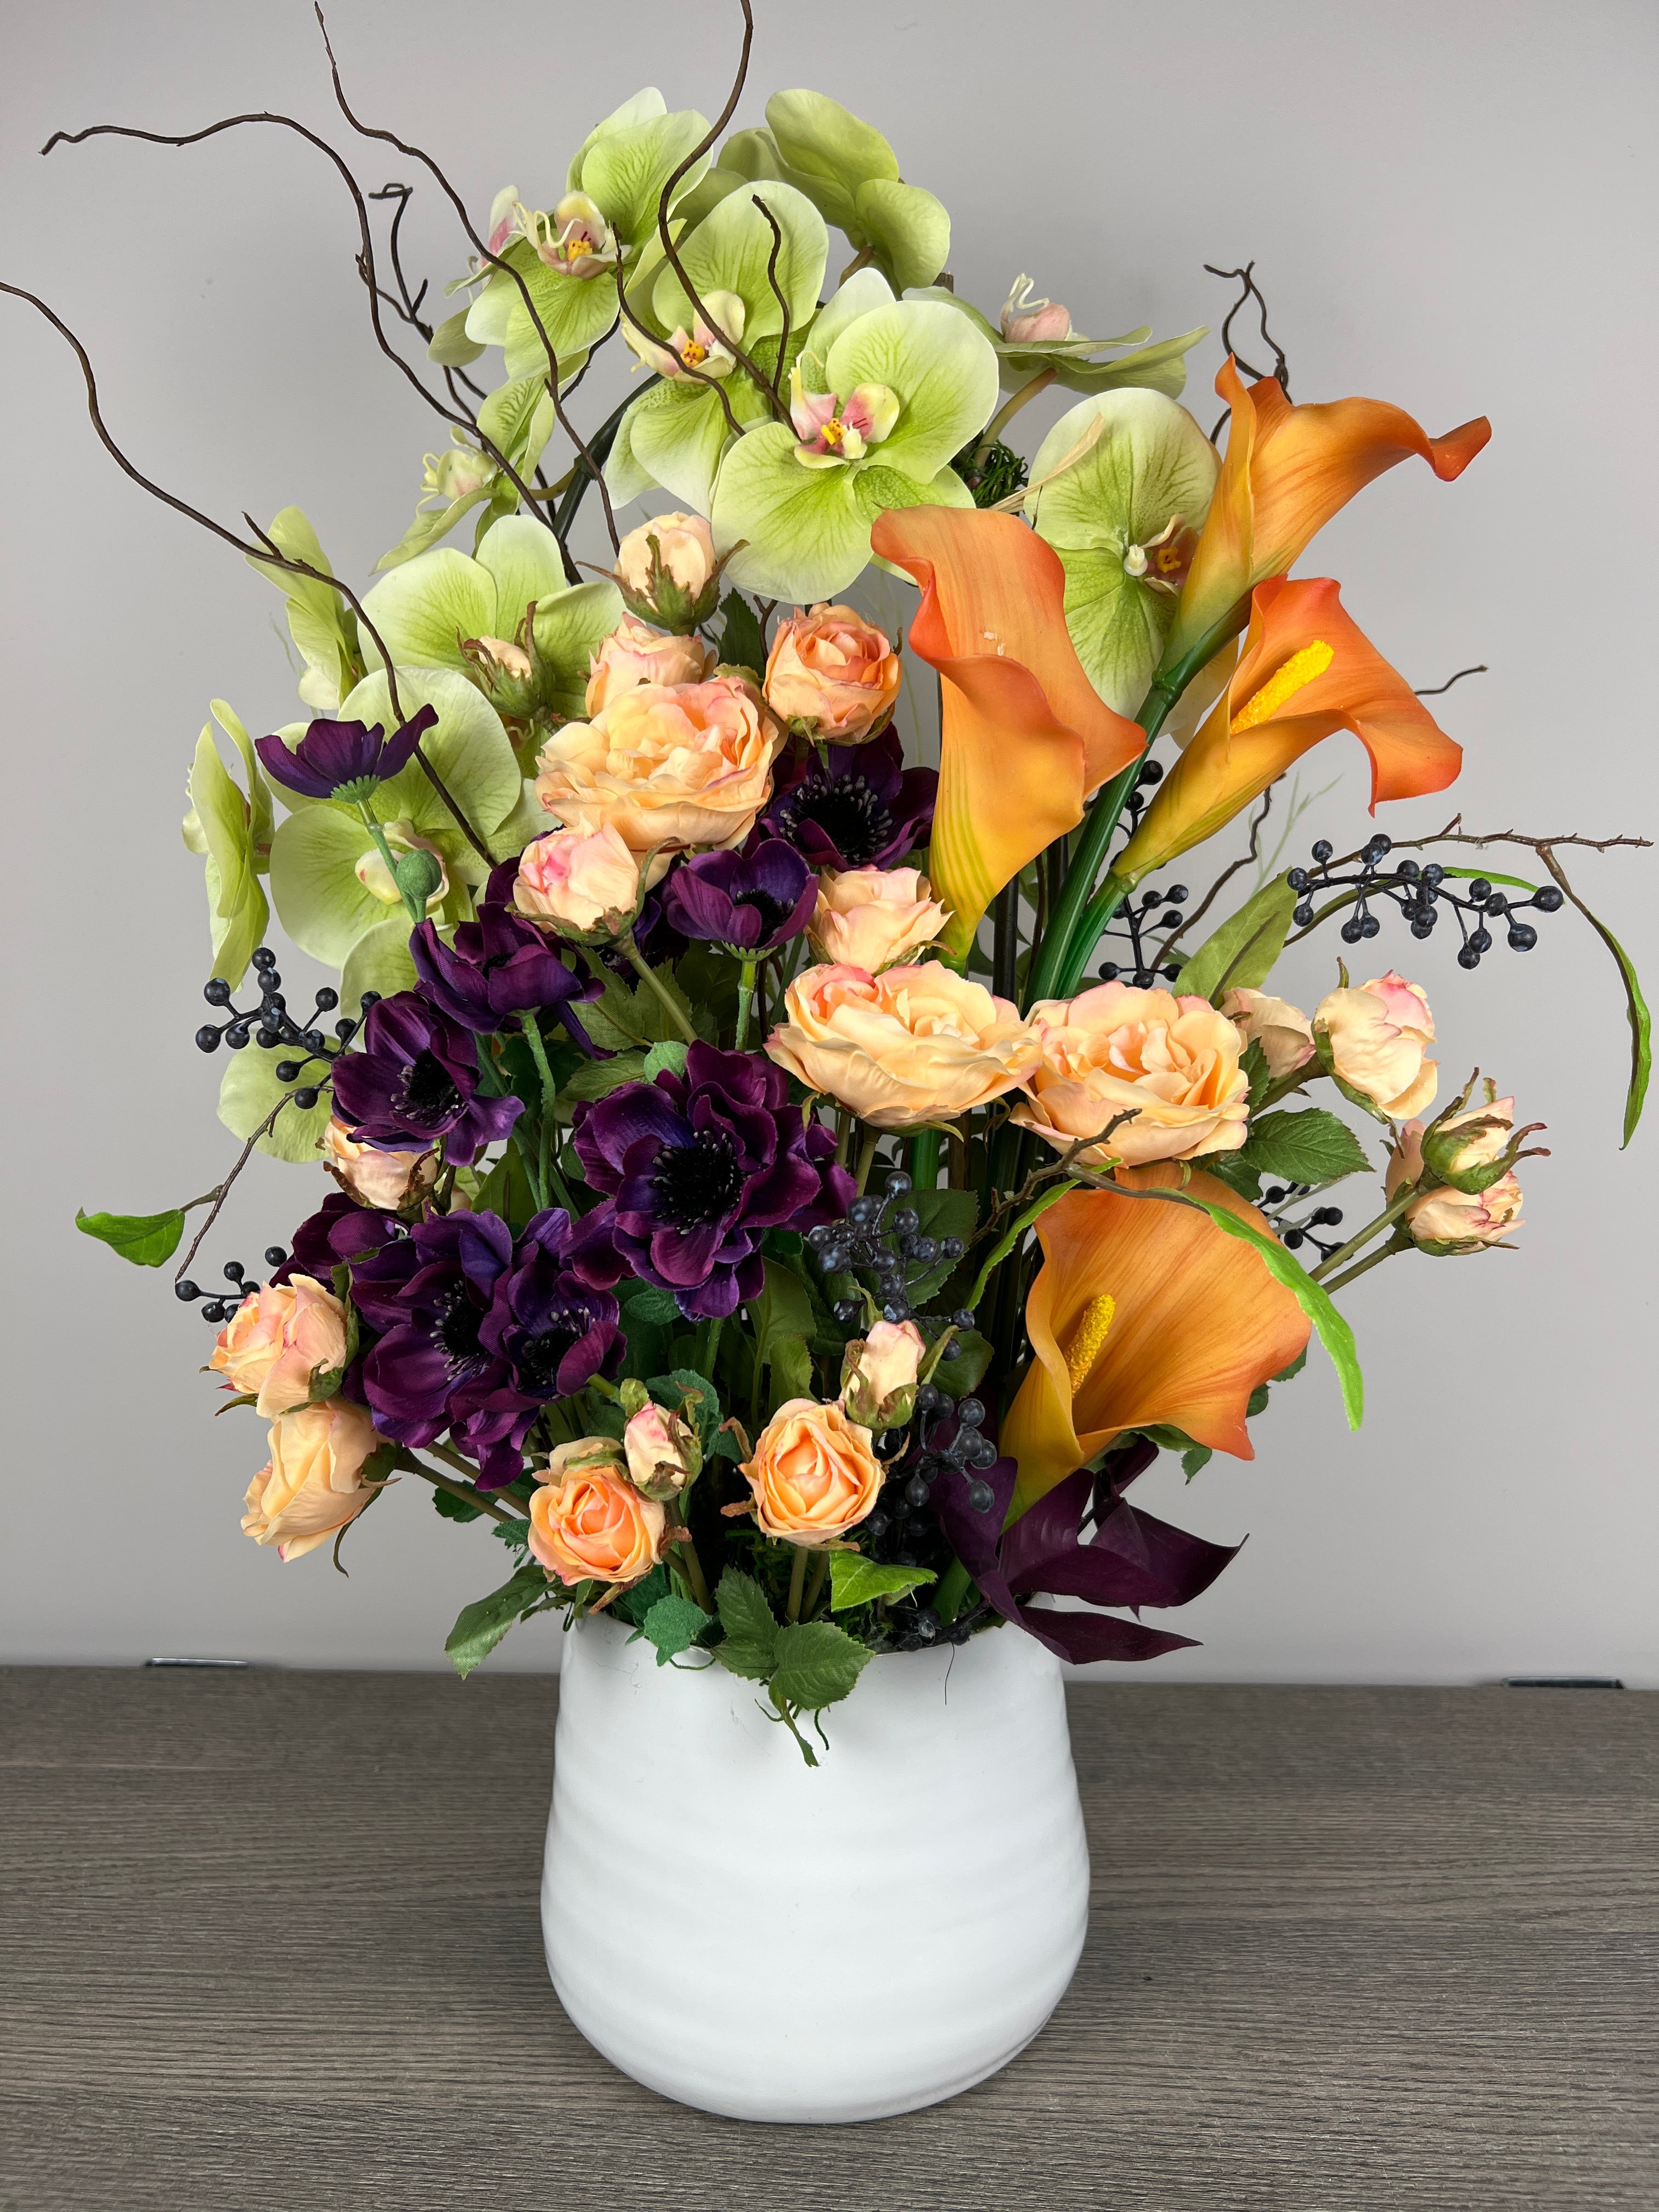 Flower Bouquets - Artificial Silk Flower Arrangements